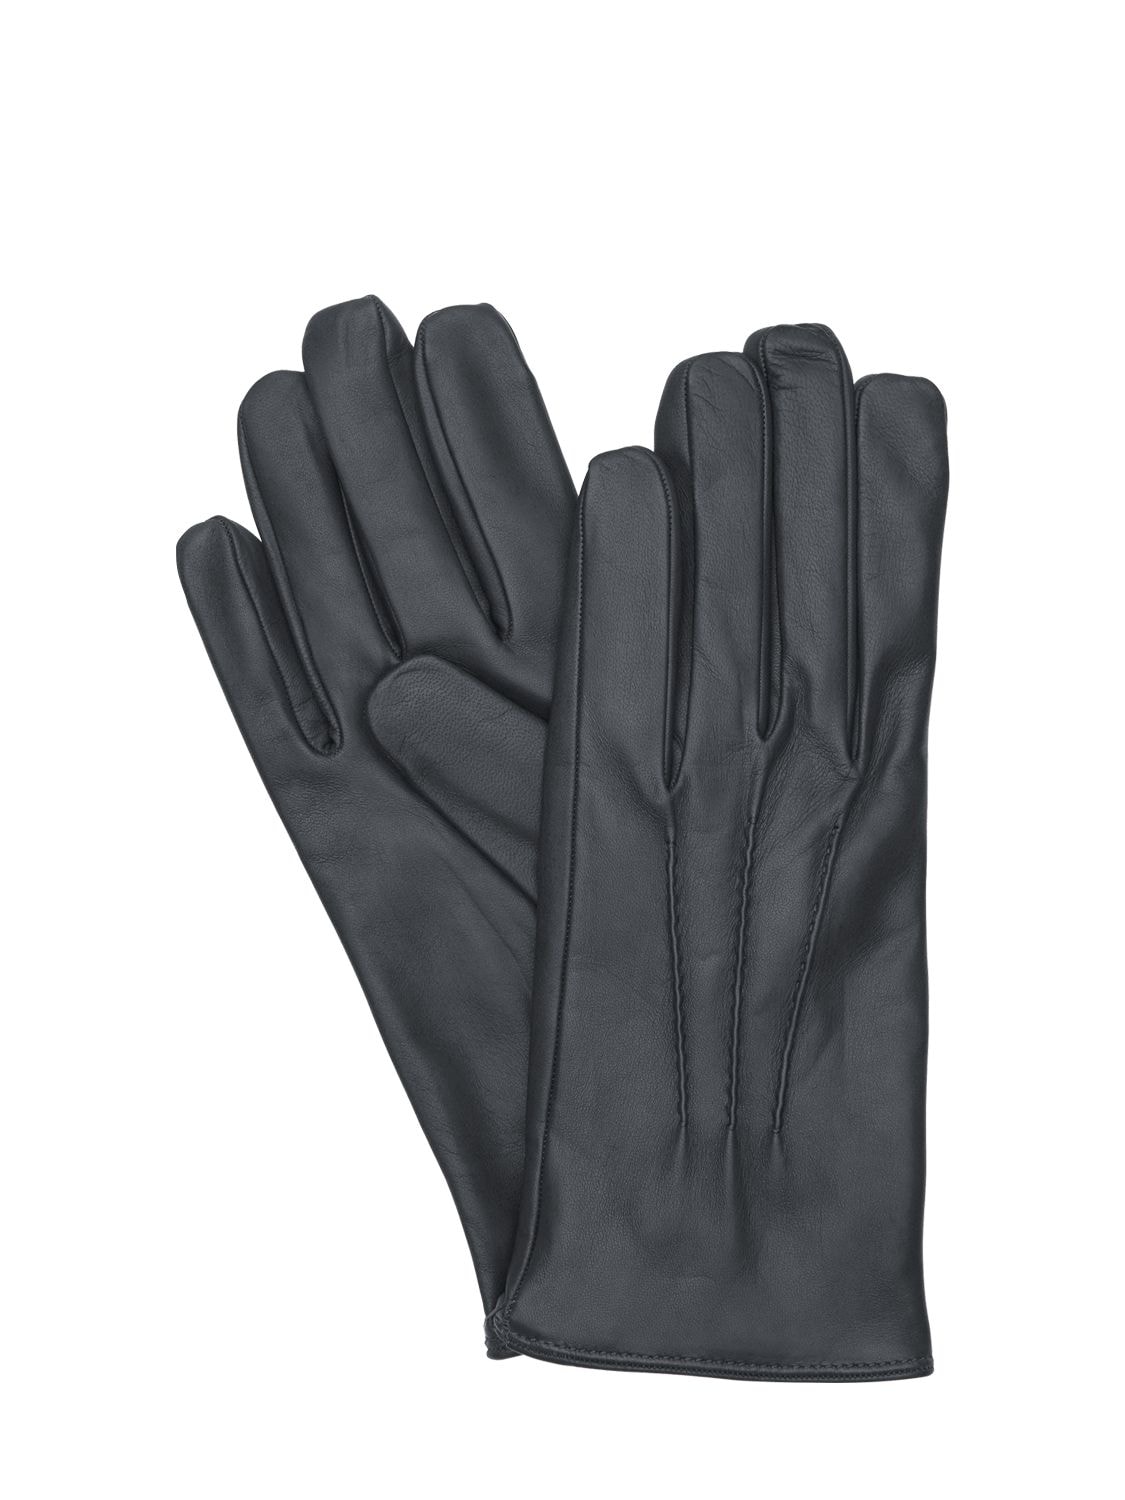 Mario Portolano Leather Gloves In Grey